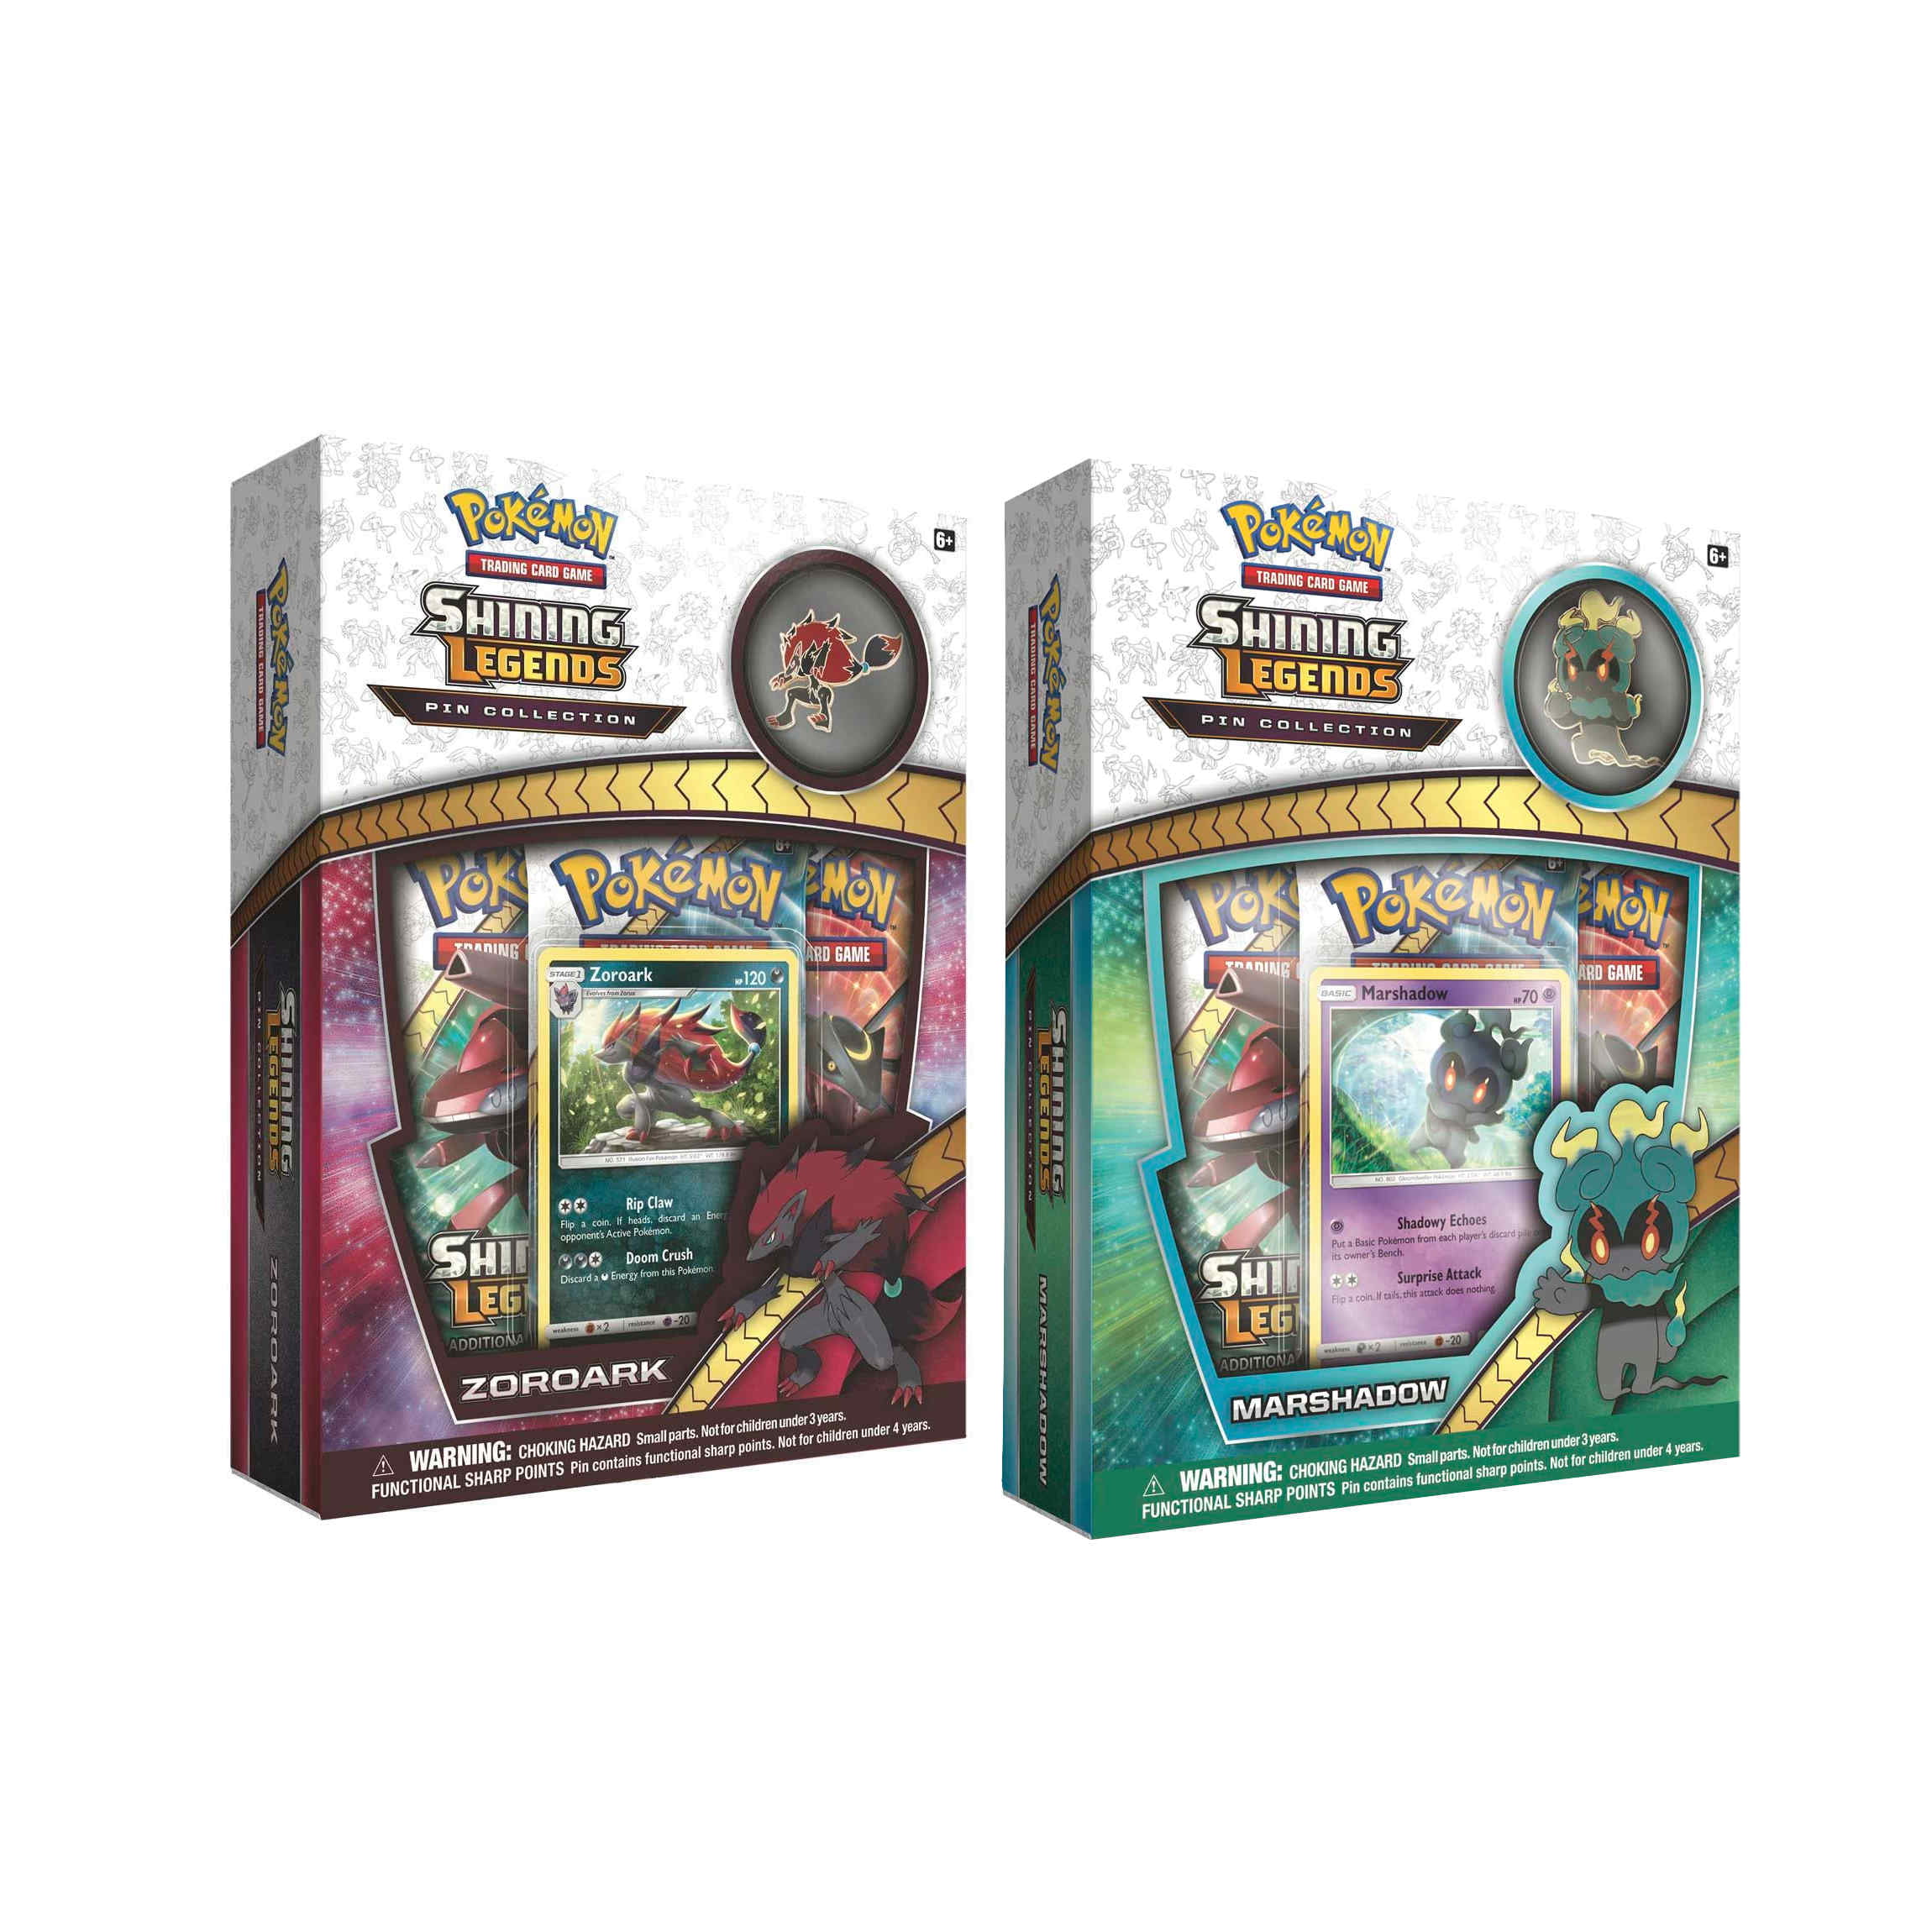 BREAK EVOLUTION BOX ARCANINE Pokemon Tins & Box Sets Sun City Games!!!